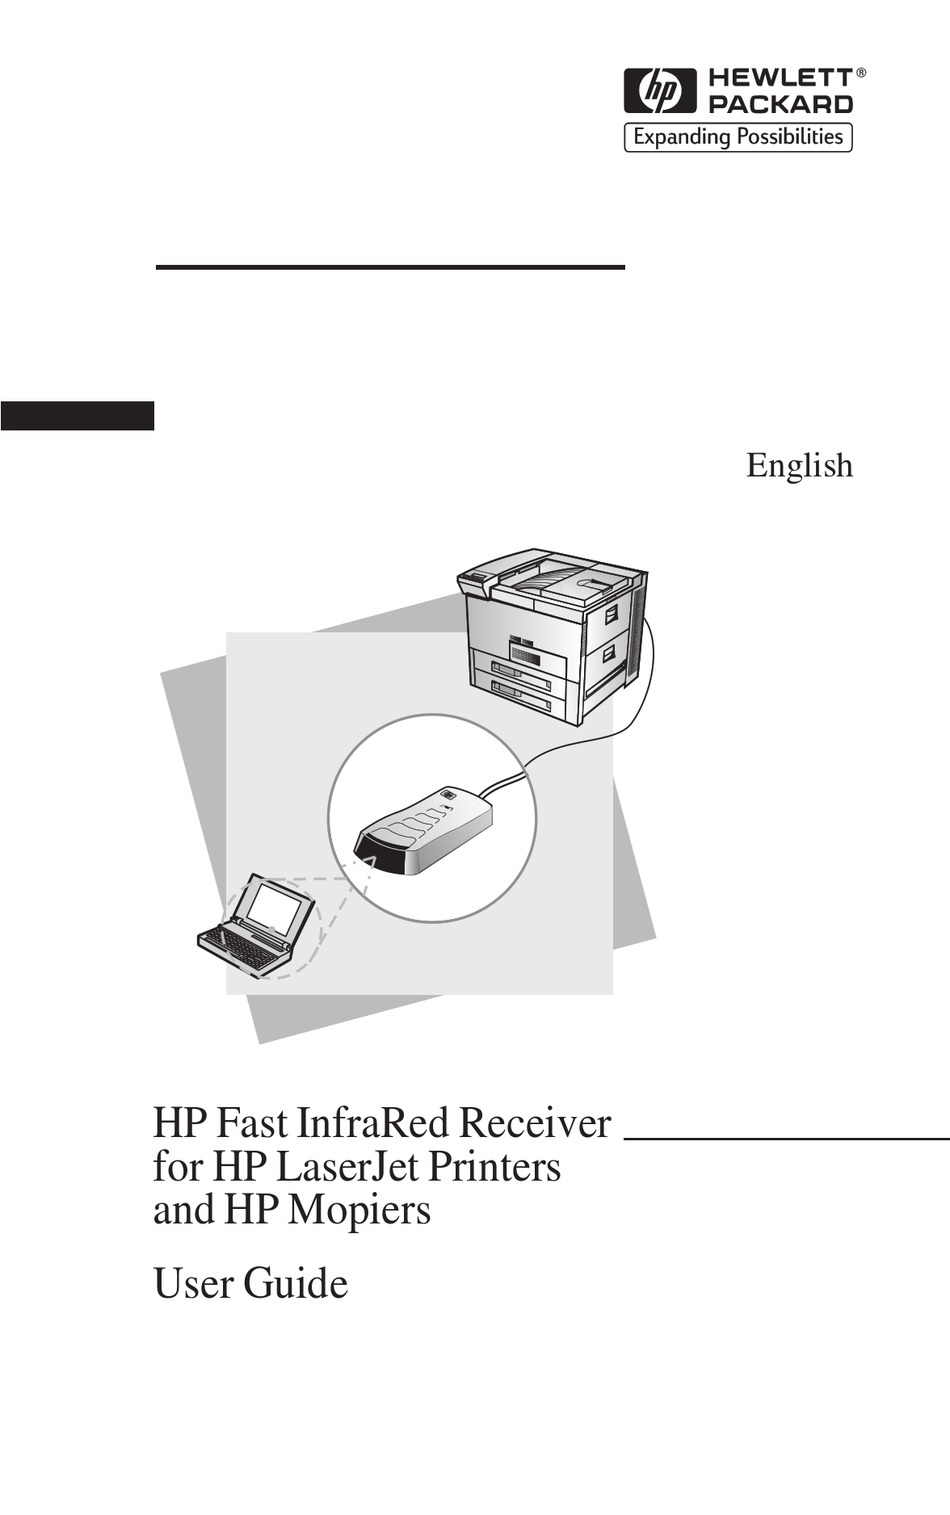 HP HEWLETT-PACKARD USER MANUAL Pdf Download | ManualsLib